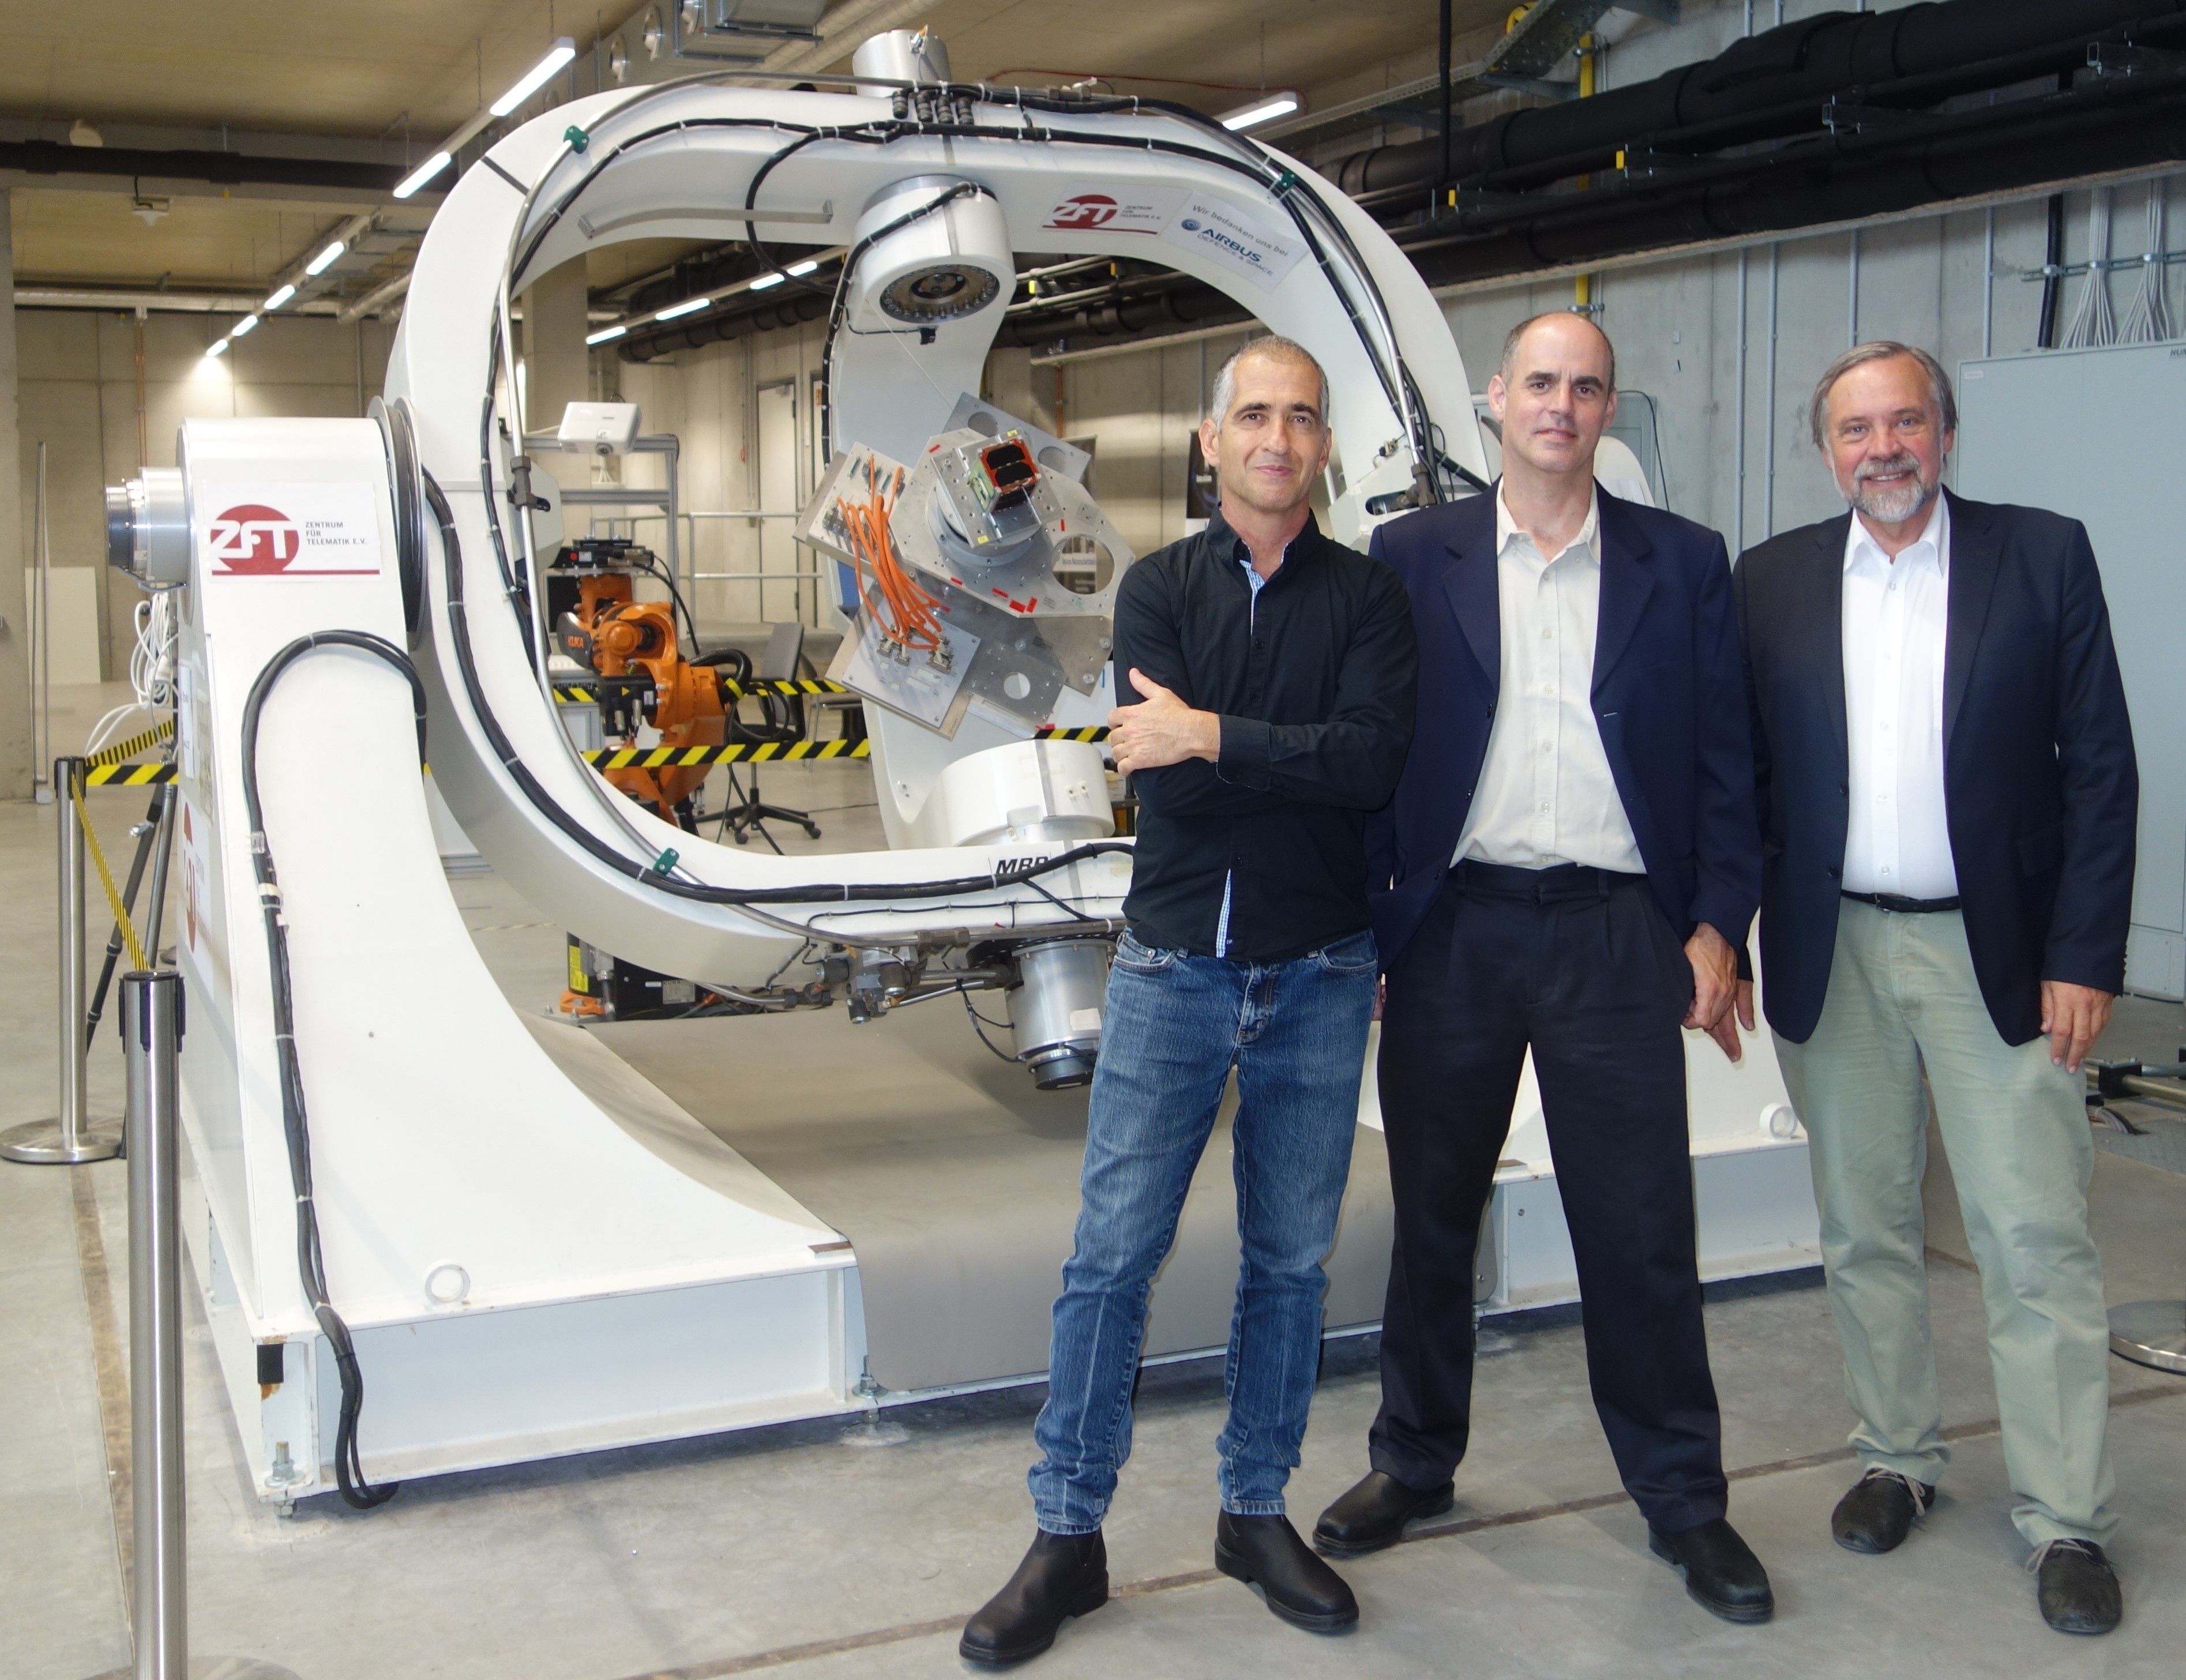 The award winners Ilan Koren, Yoaf Schechner and Klaus Schilling in the multi-satellite test laboratory of the Zentrum fuer Telematik.